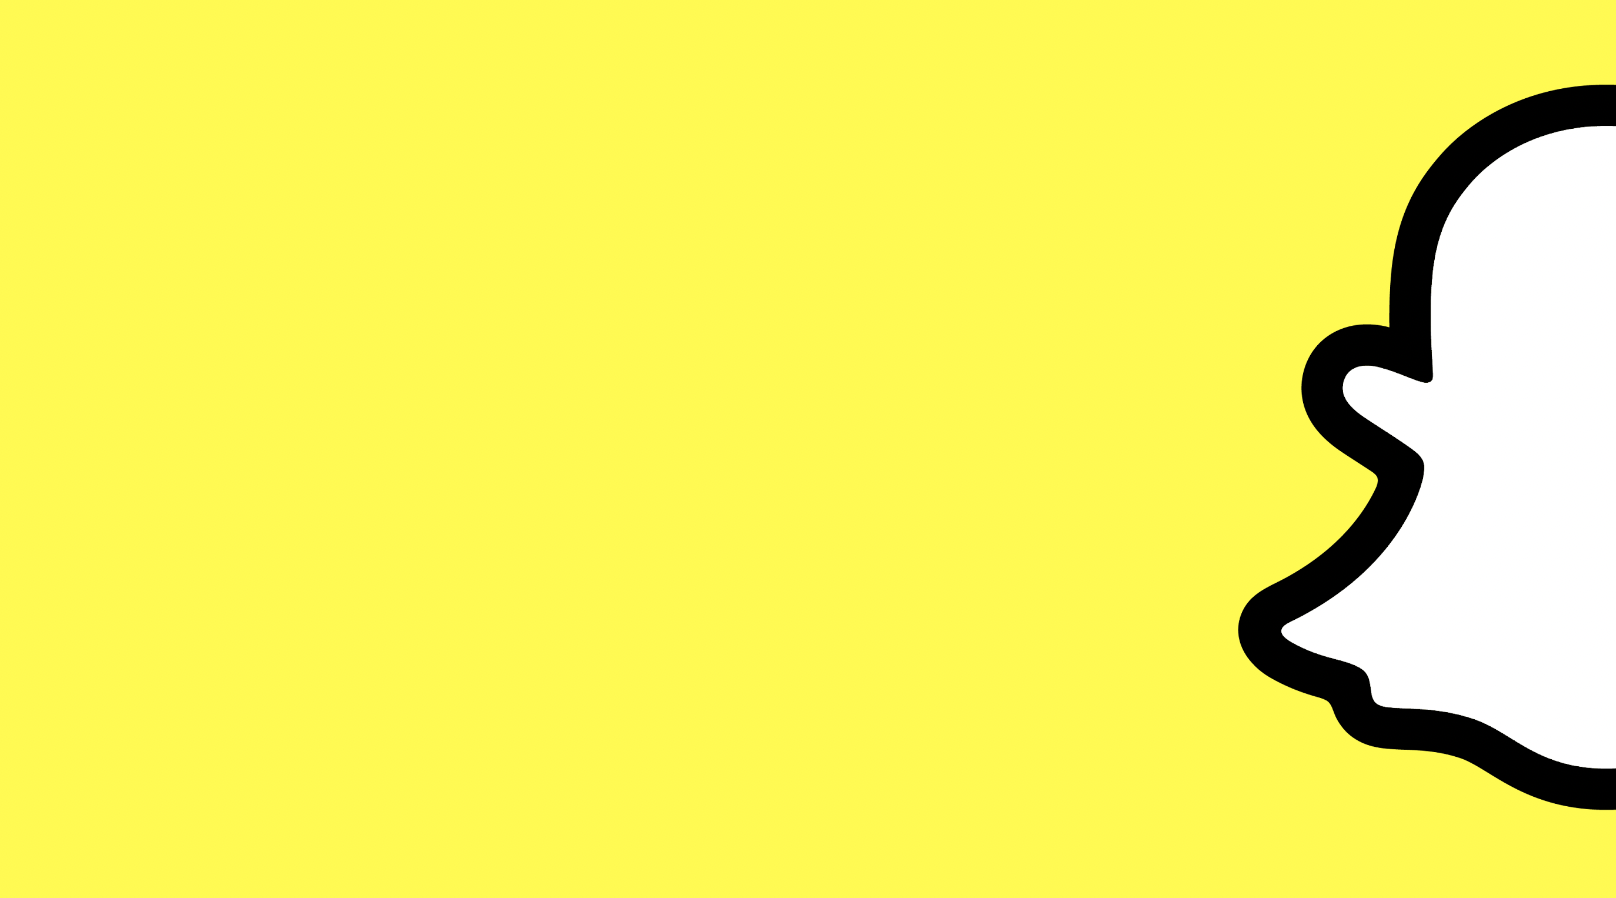 Snapchat logomark: White ghost shape on yellow background.